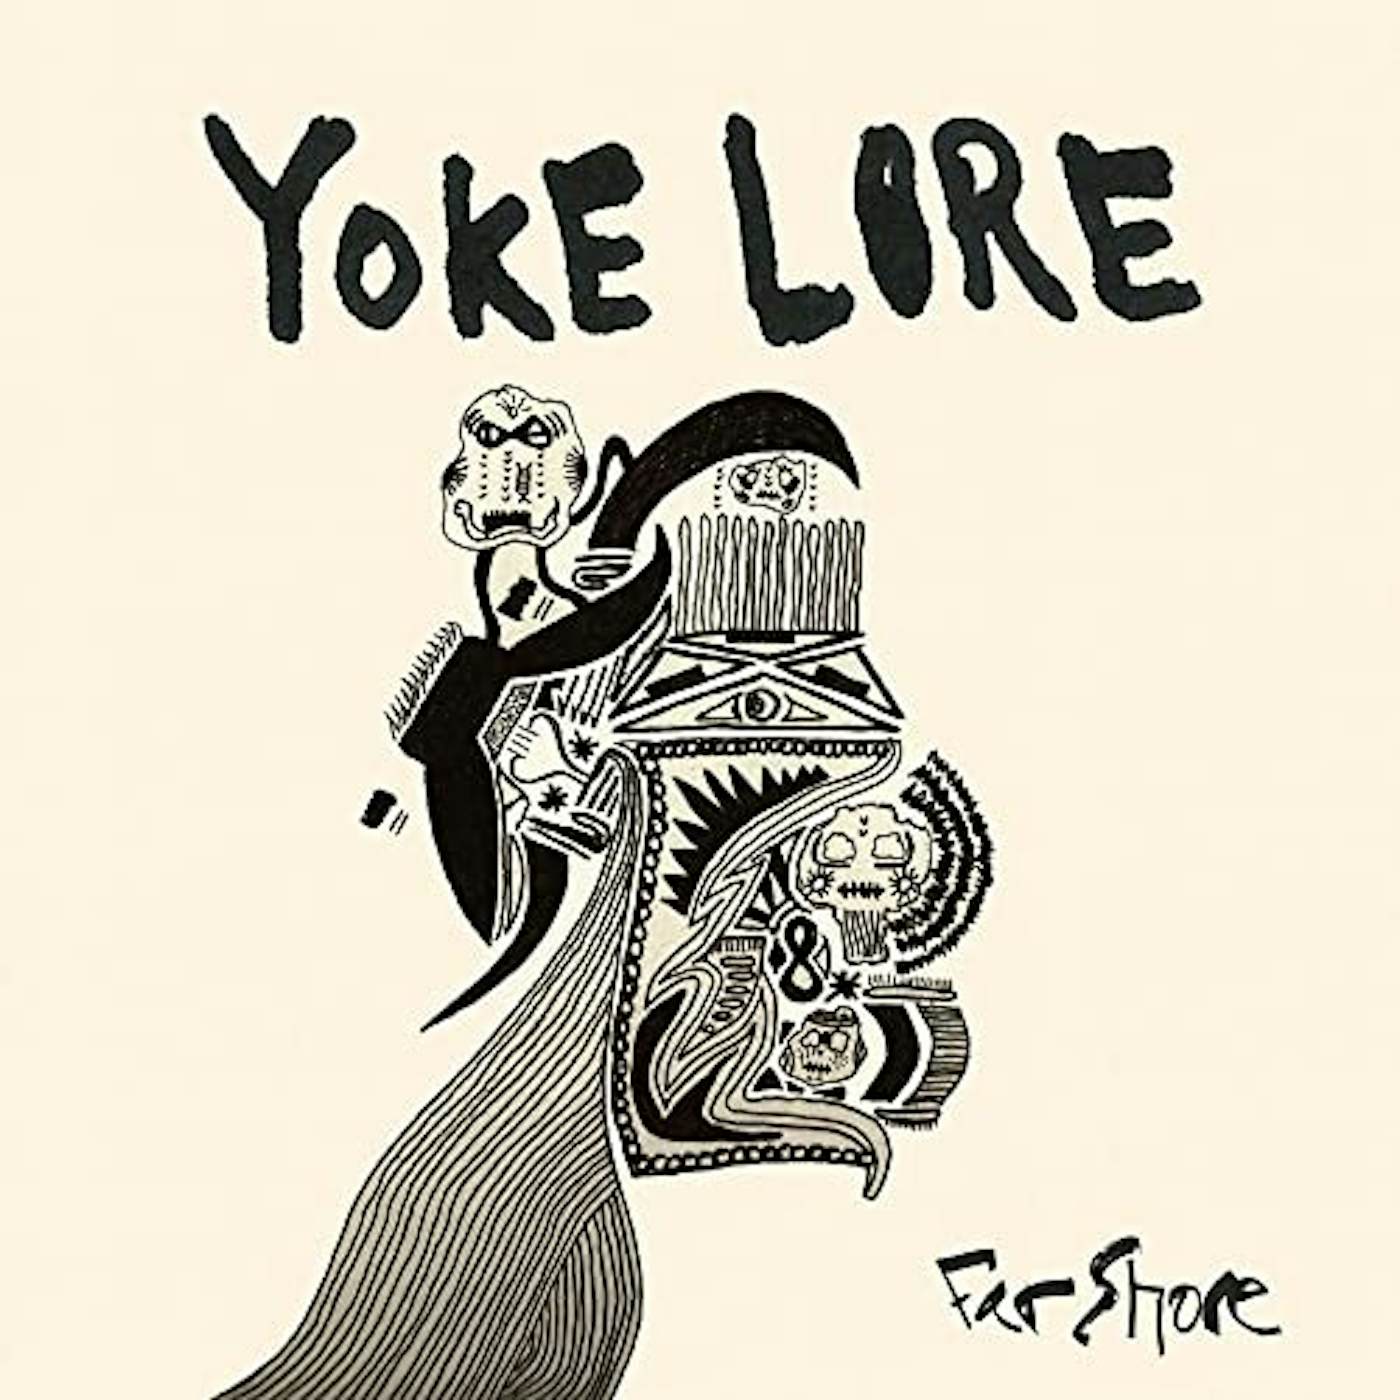 Yoke Lore FAR SHORE (5 YEAR ANNIVERSARY EDITION) Vinyl Record